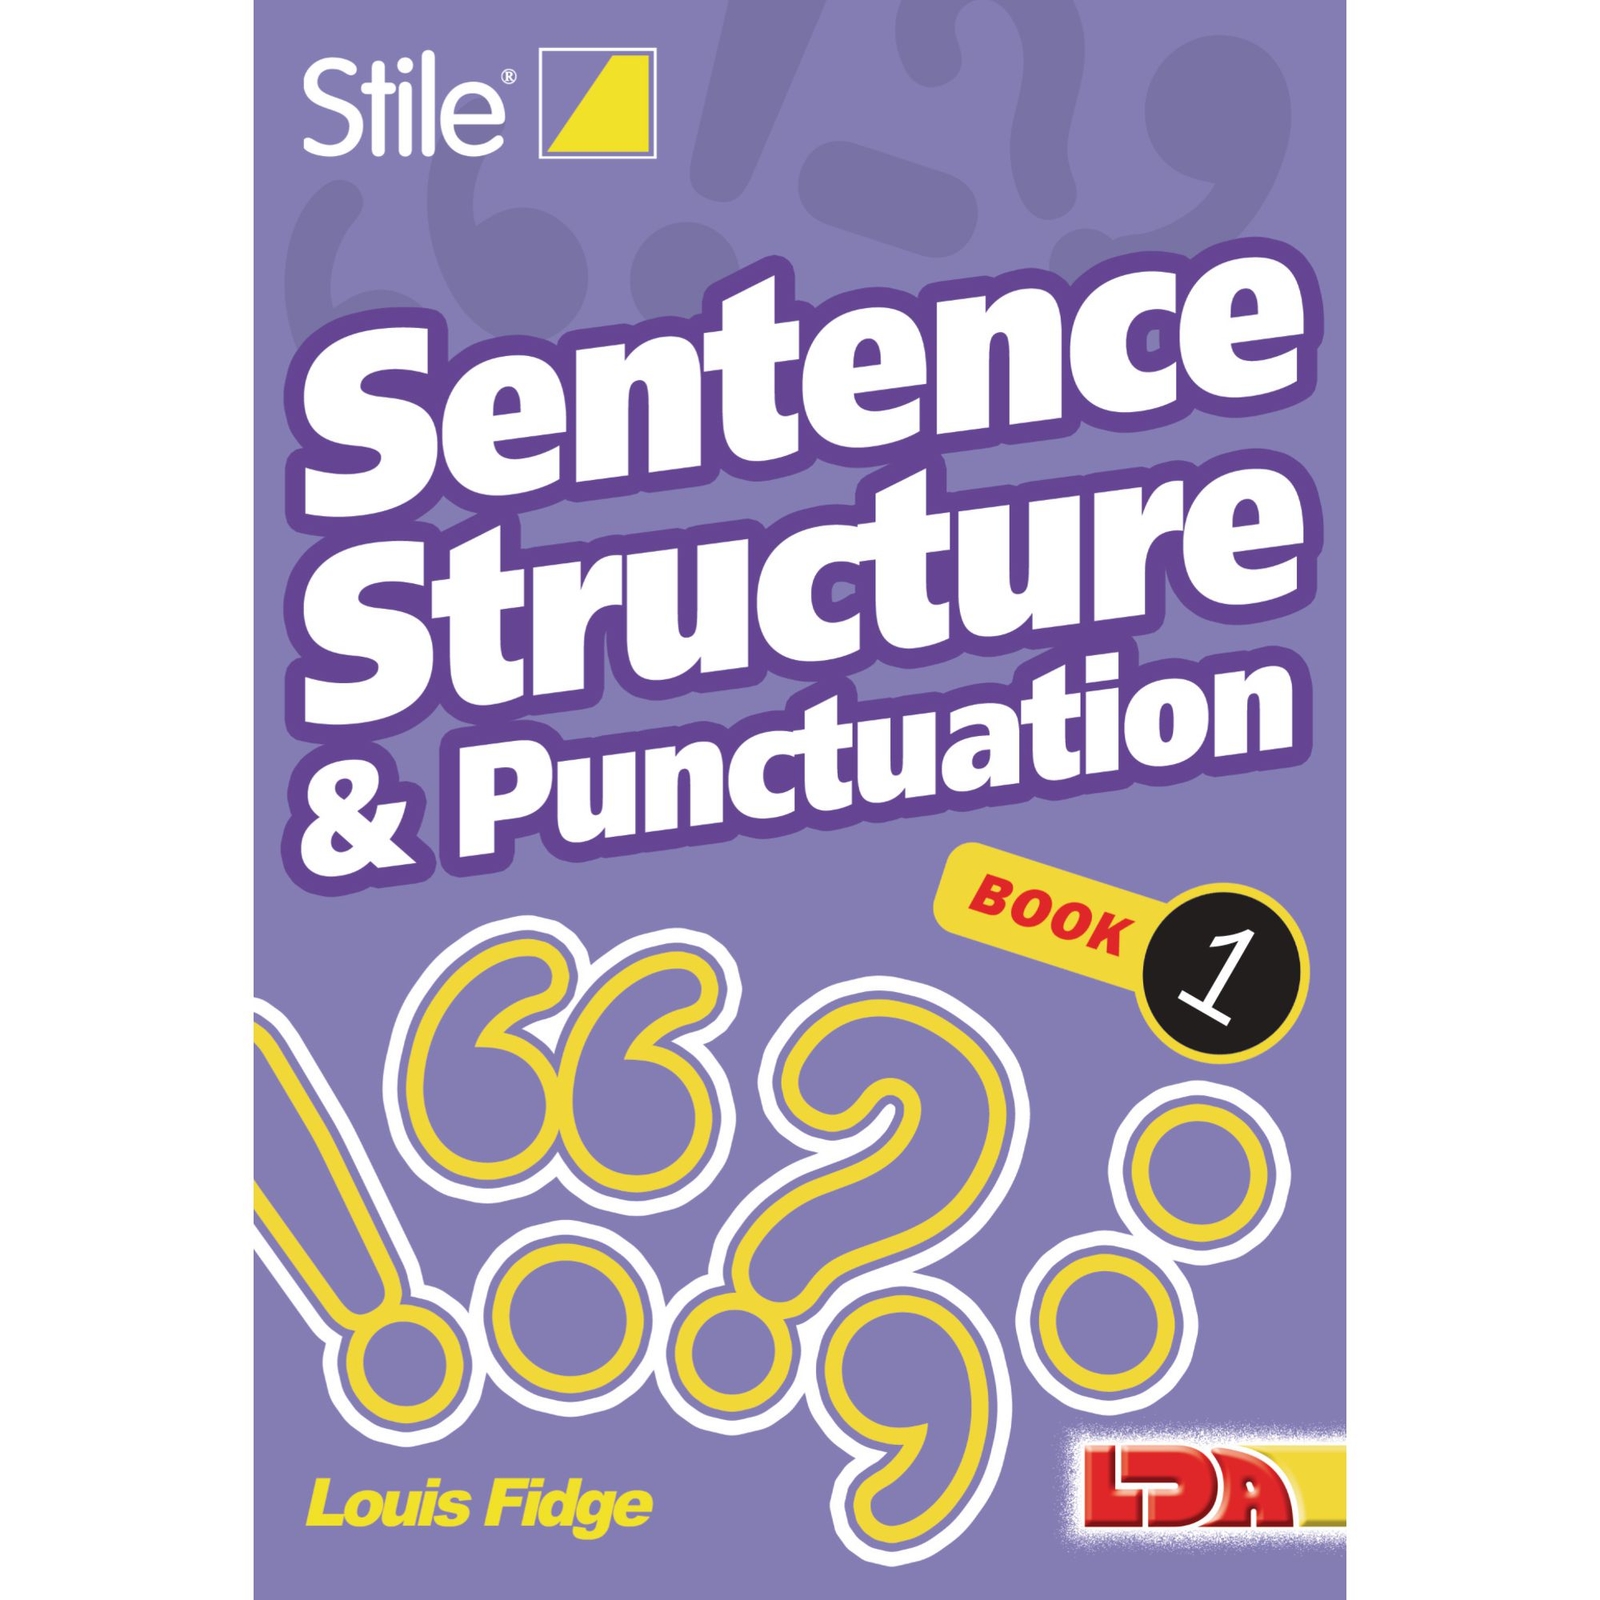 Stile Sentence Structure & Punctuation - Books 1-12